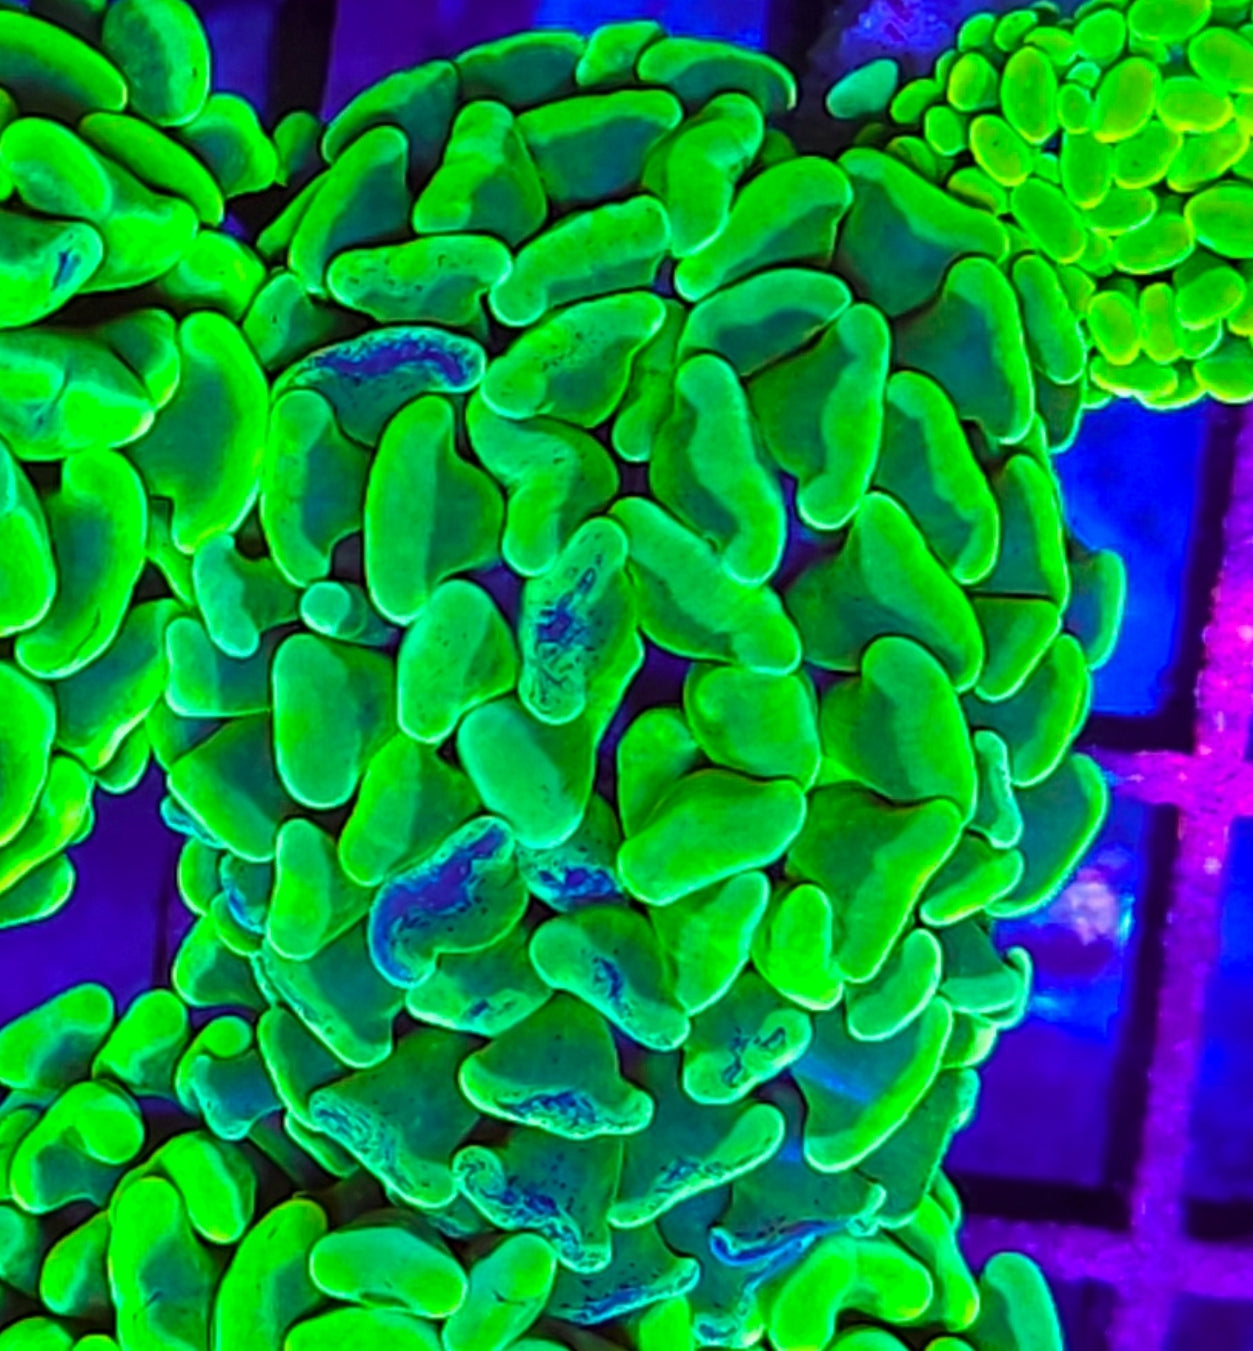 WYSIWYG Toxic Splatter Hammer coral new